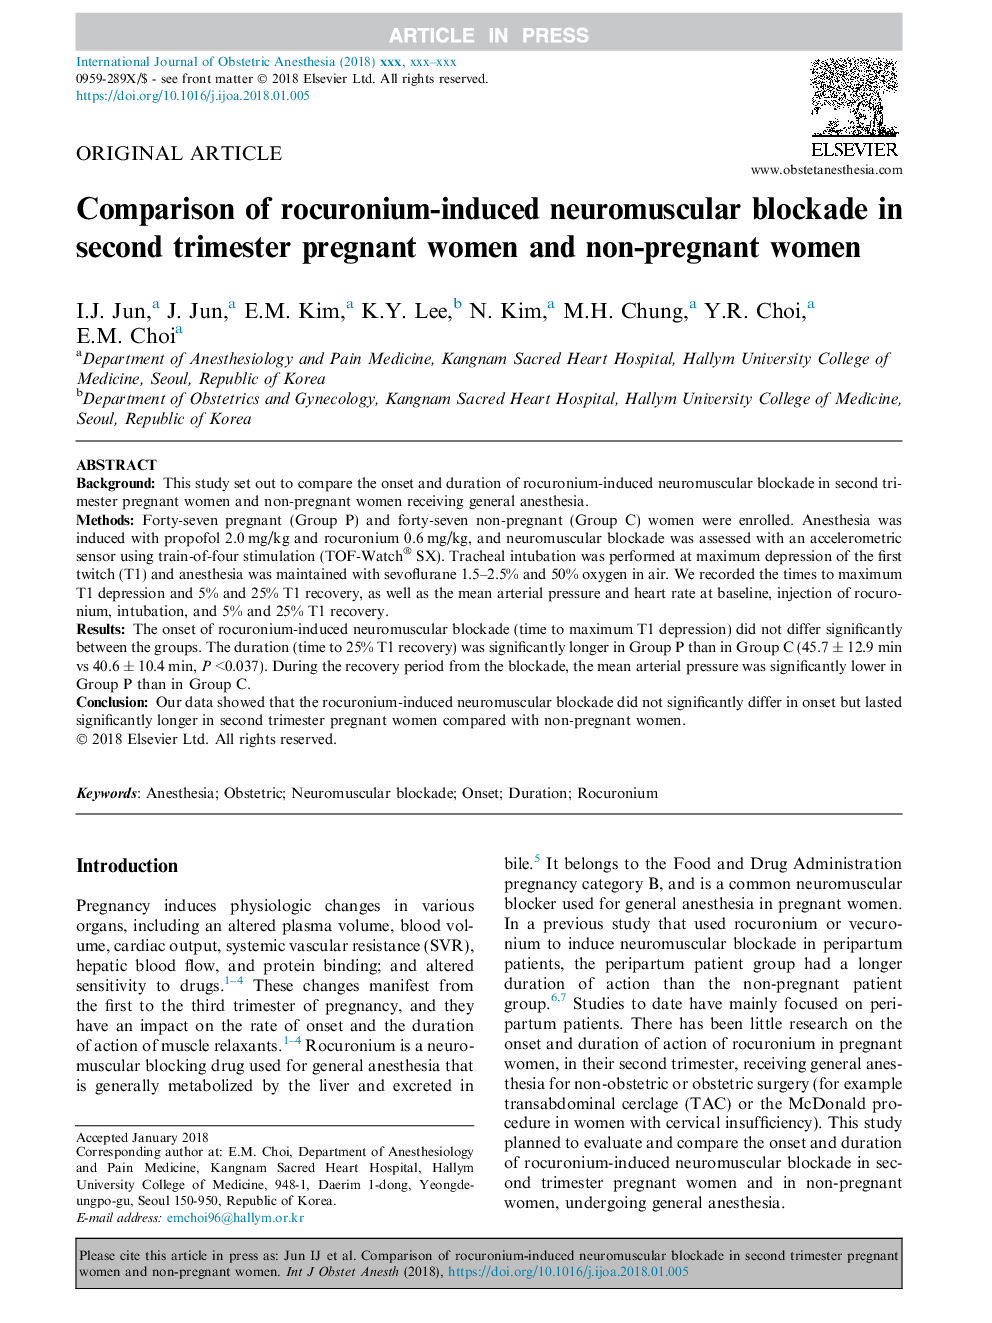 Comparison of rocuronium-induced neuromuscular blockade in second trimester pregnant women and non-pregnant women